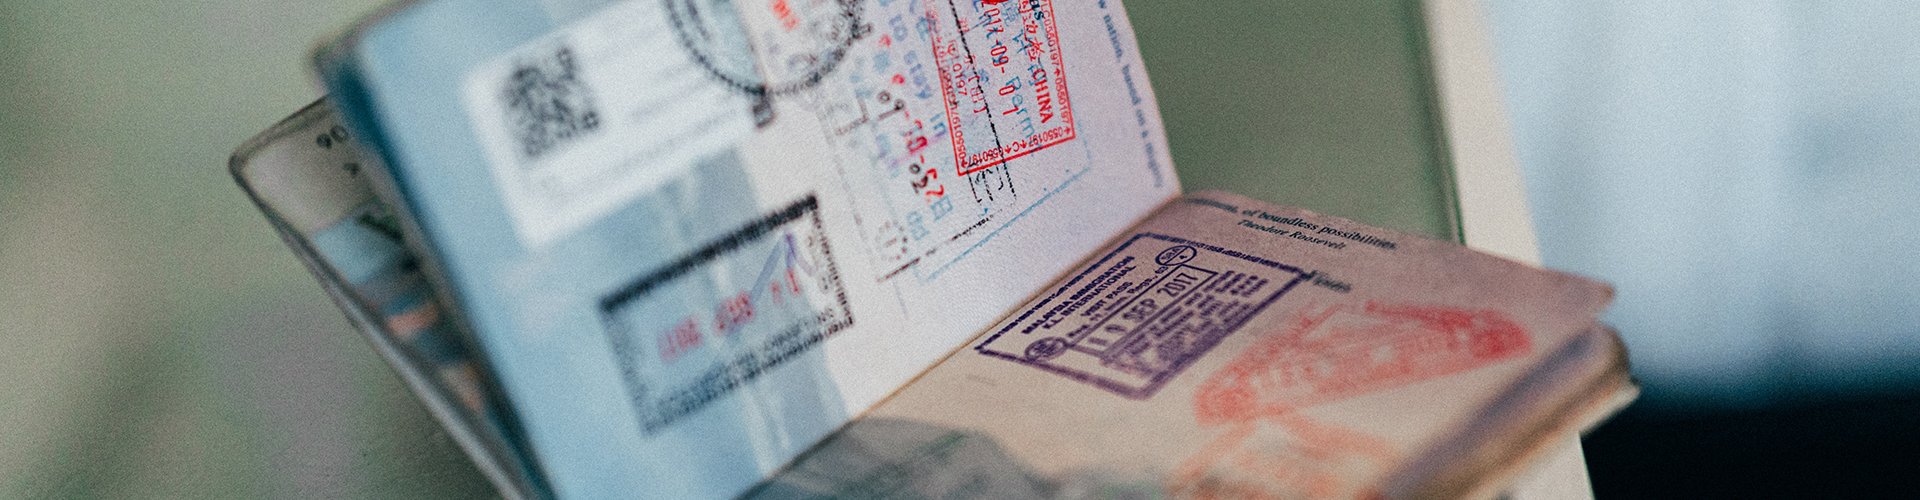 Passport for traveling.